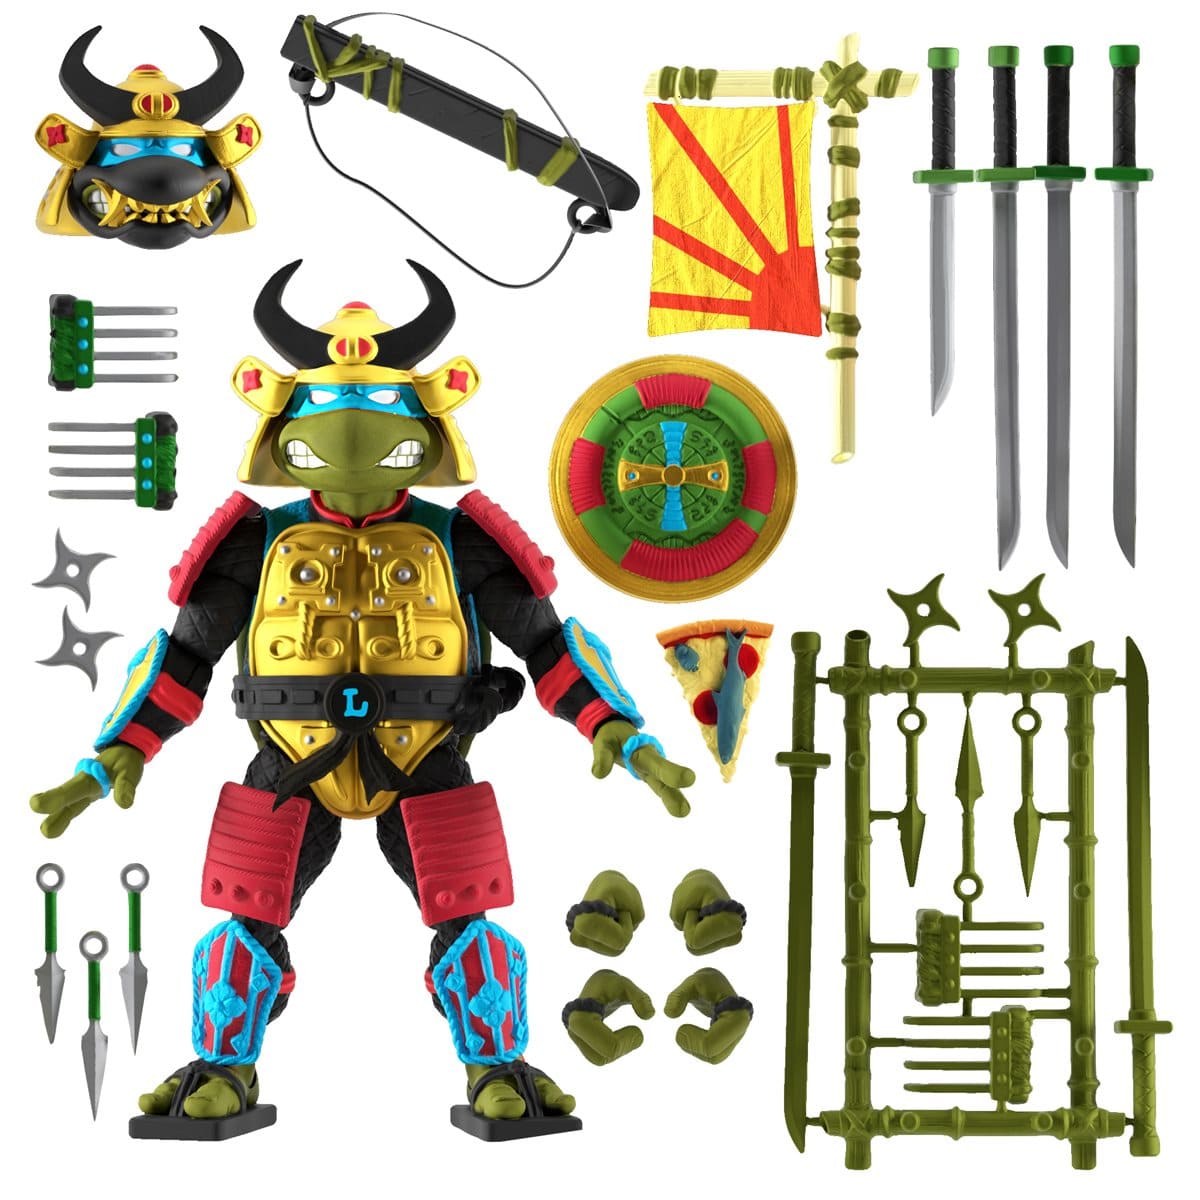 Teenage Mutant Ninja Turtles Ultimates Leo the Sewer Samurai 7-Inch Action Figure - Pop-O-Loco - Super7